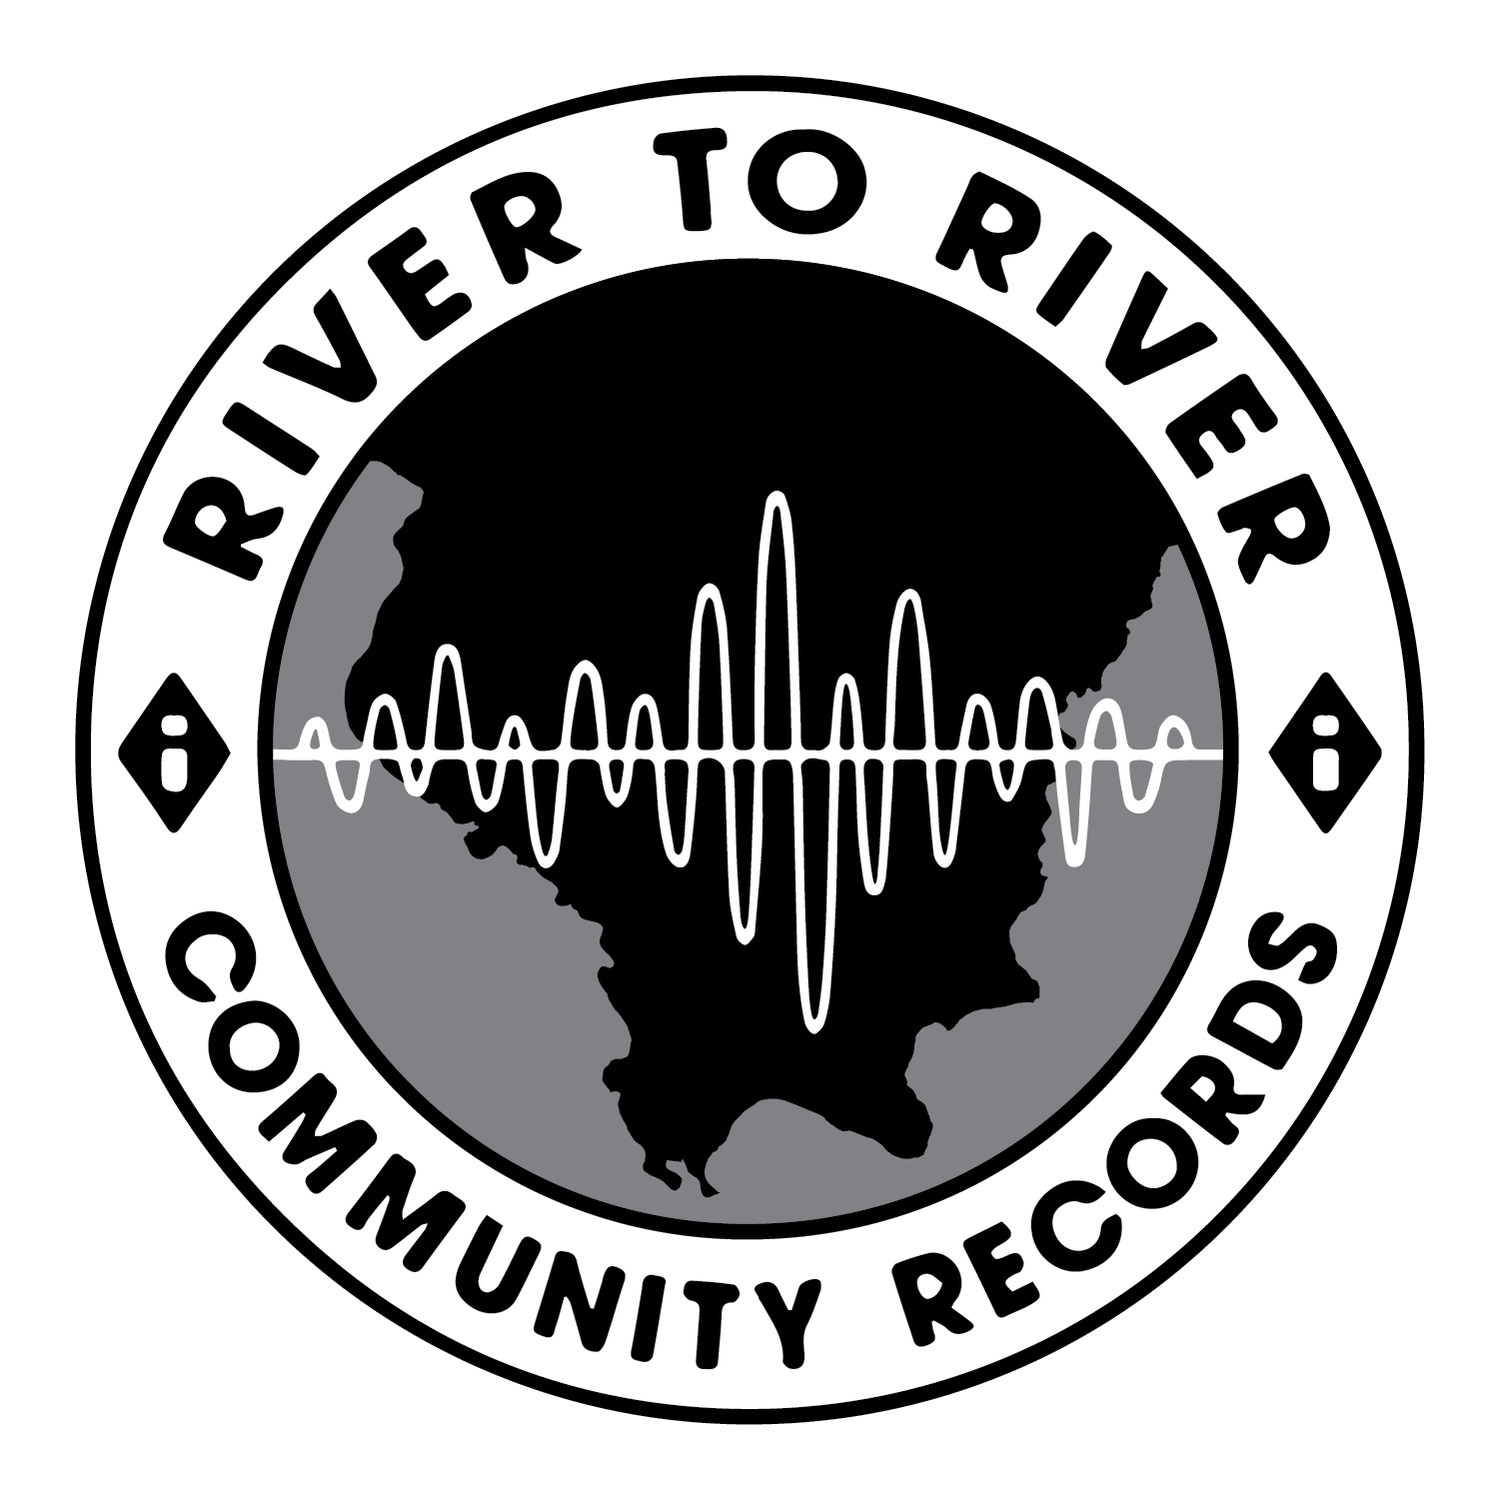 R2R Community Records